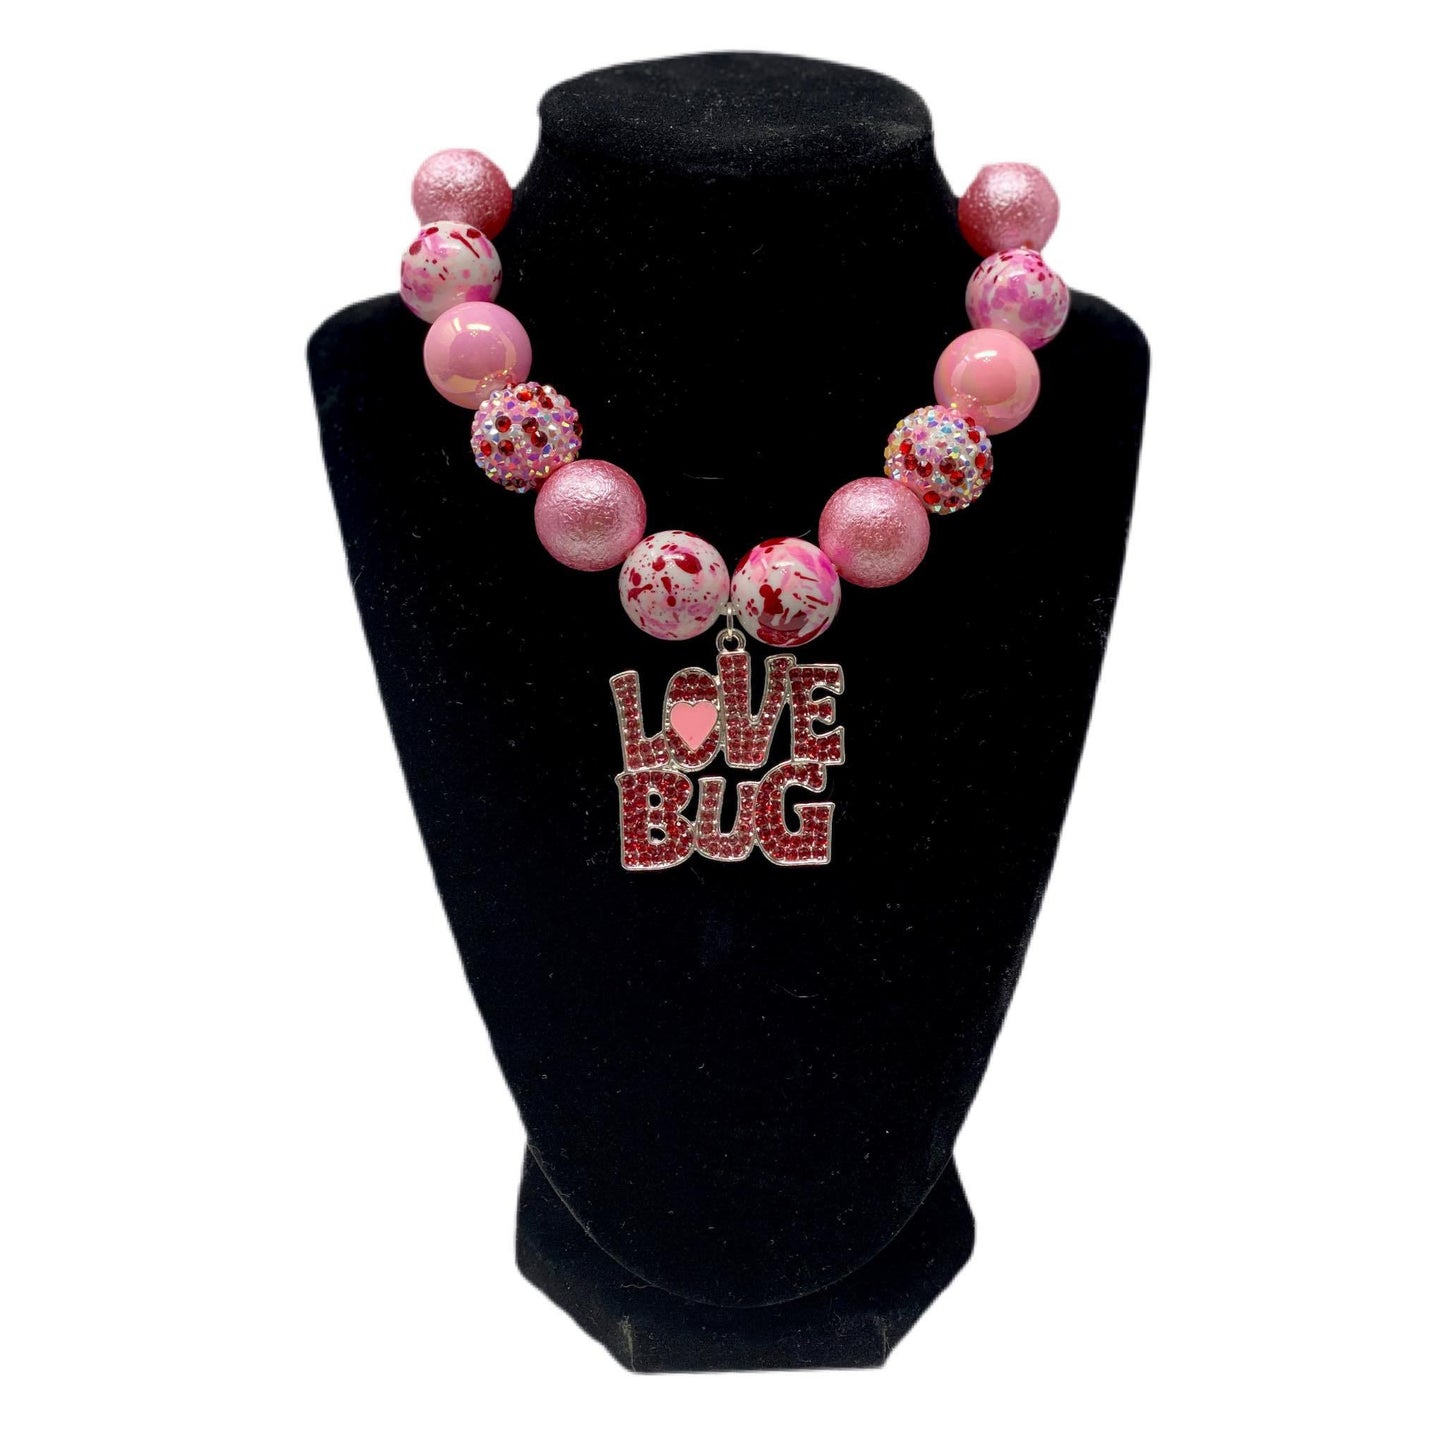 V-Day Bubblegum Necklace with Lovebug Pendant